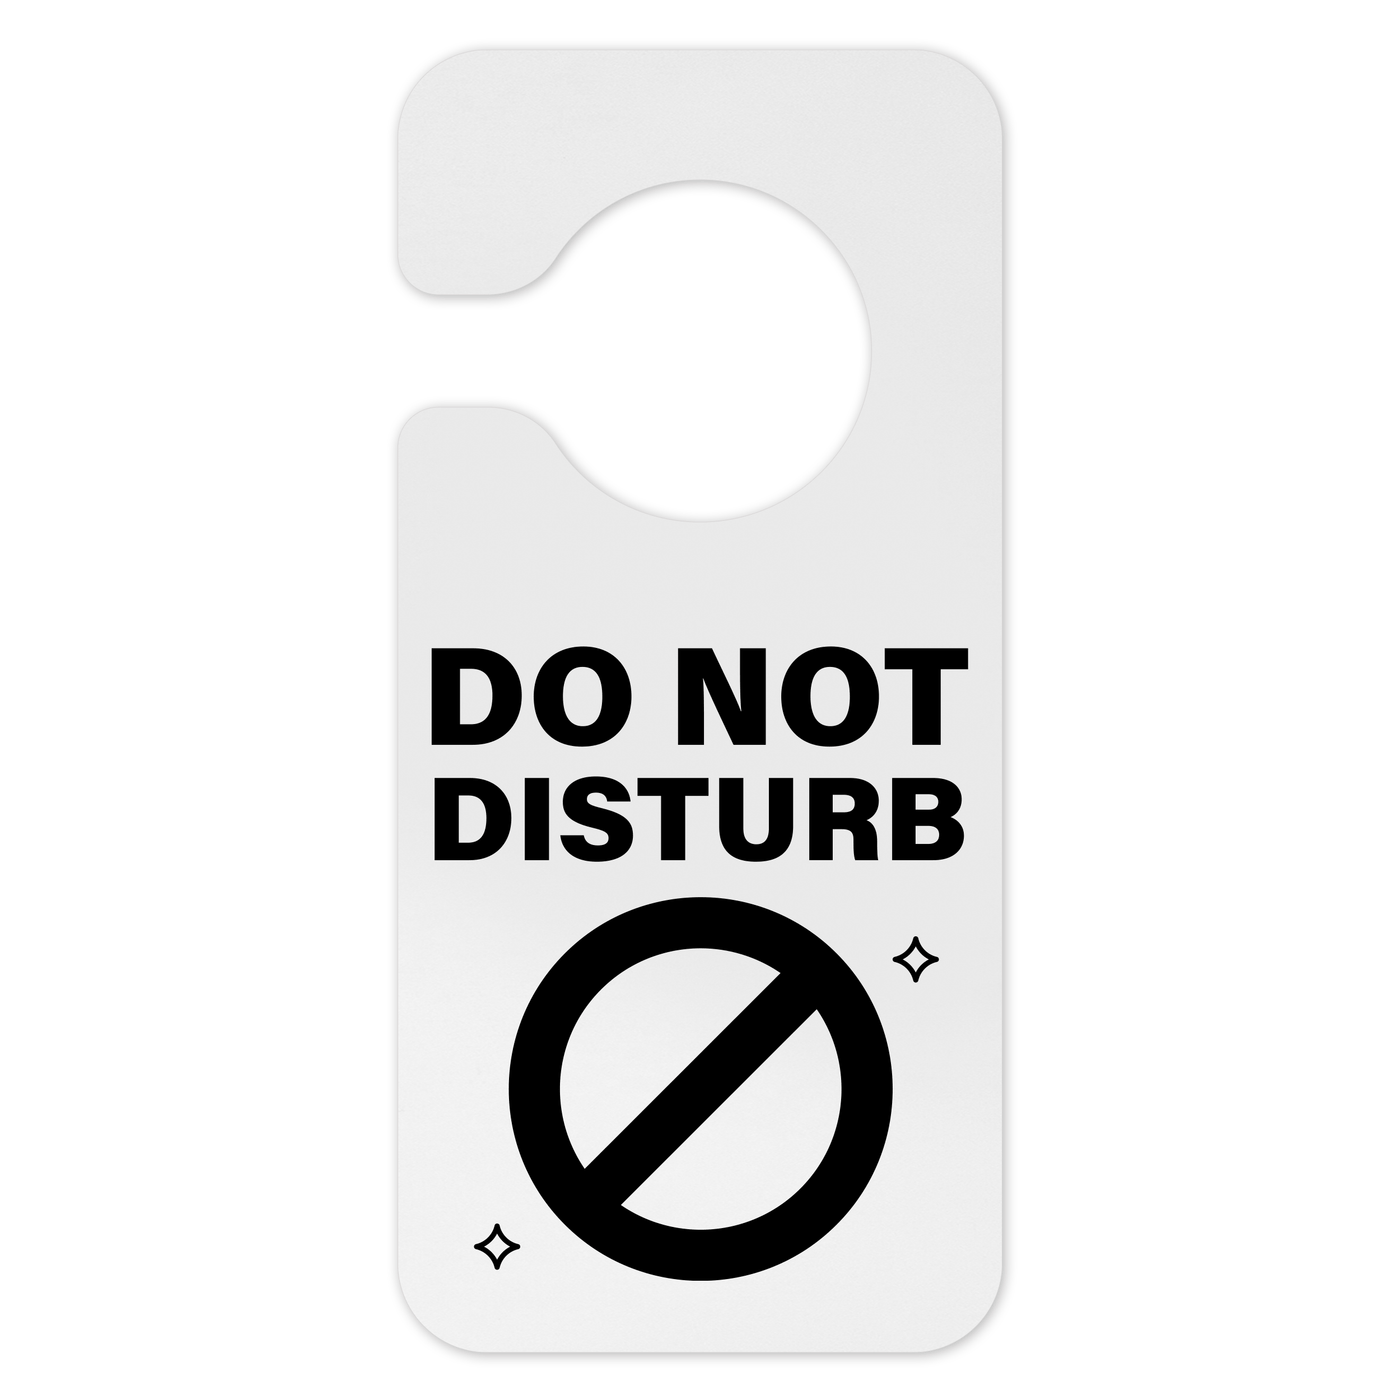 Door Signs - Don't Disturb Hotel Sign - Milk Acrylic